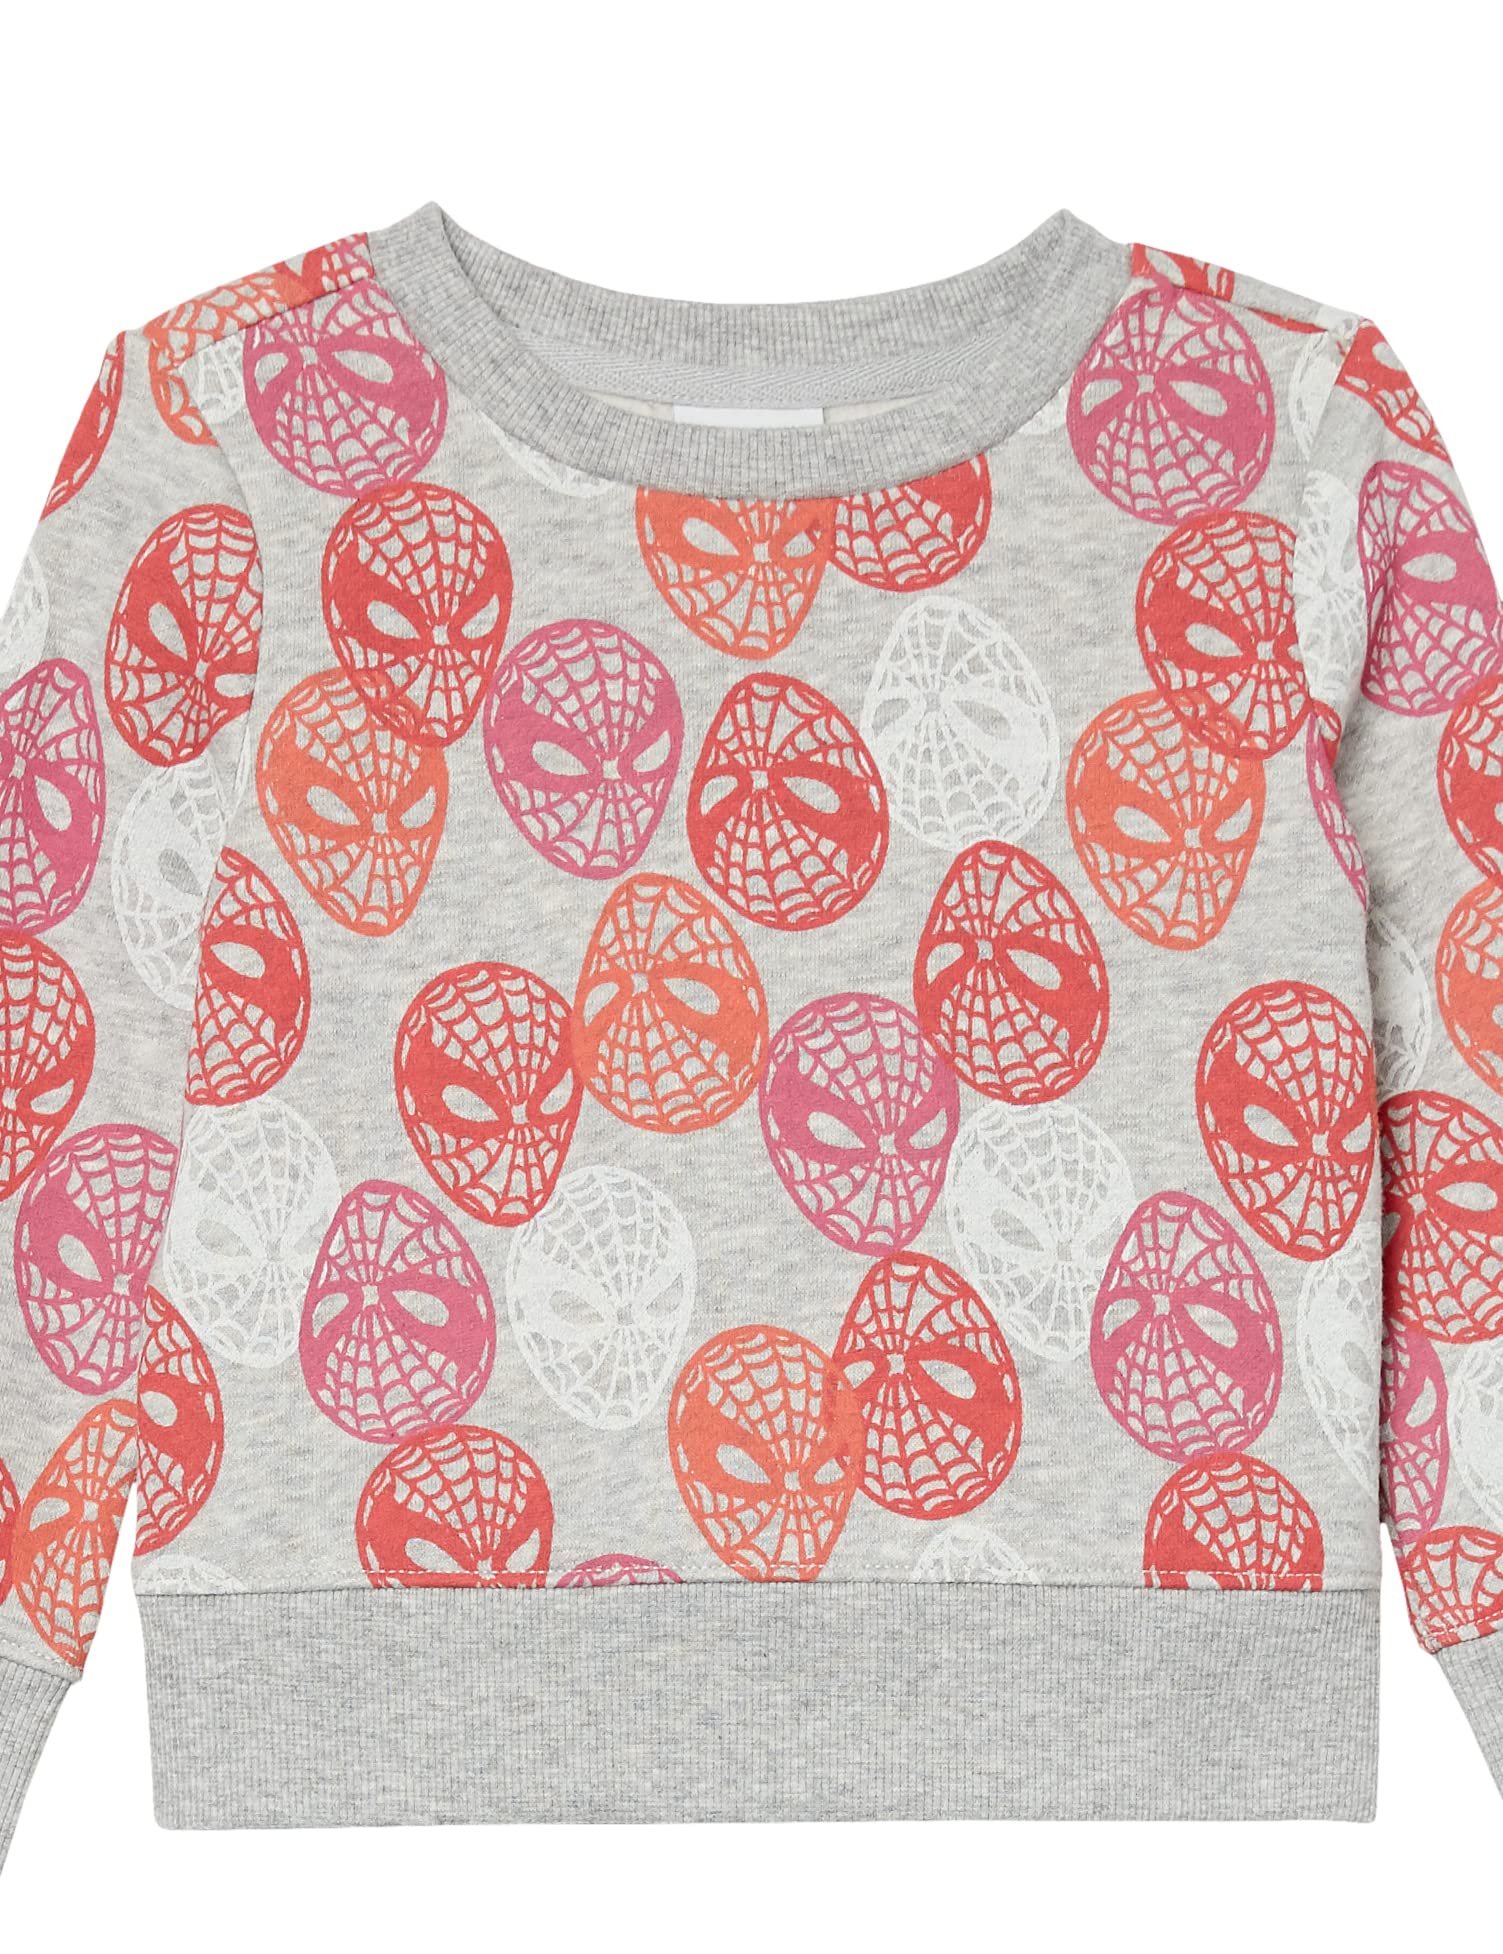 Amazon Essentials Girls' Big Disney Star Wars Marvel Princess Fleece Pullover Crew Sweatshirt